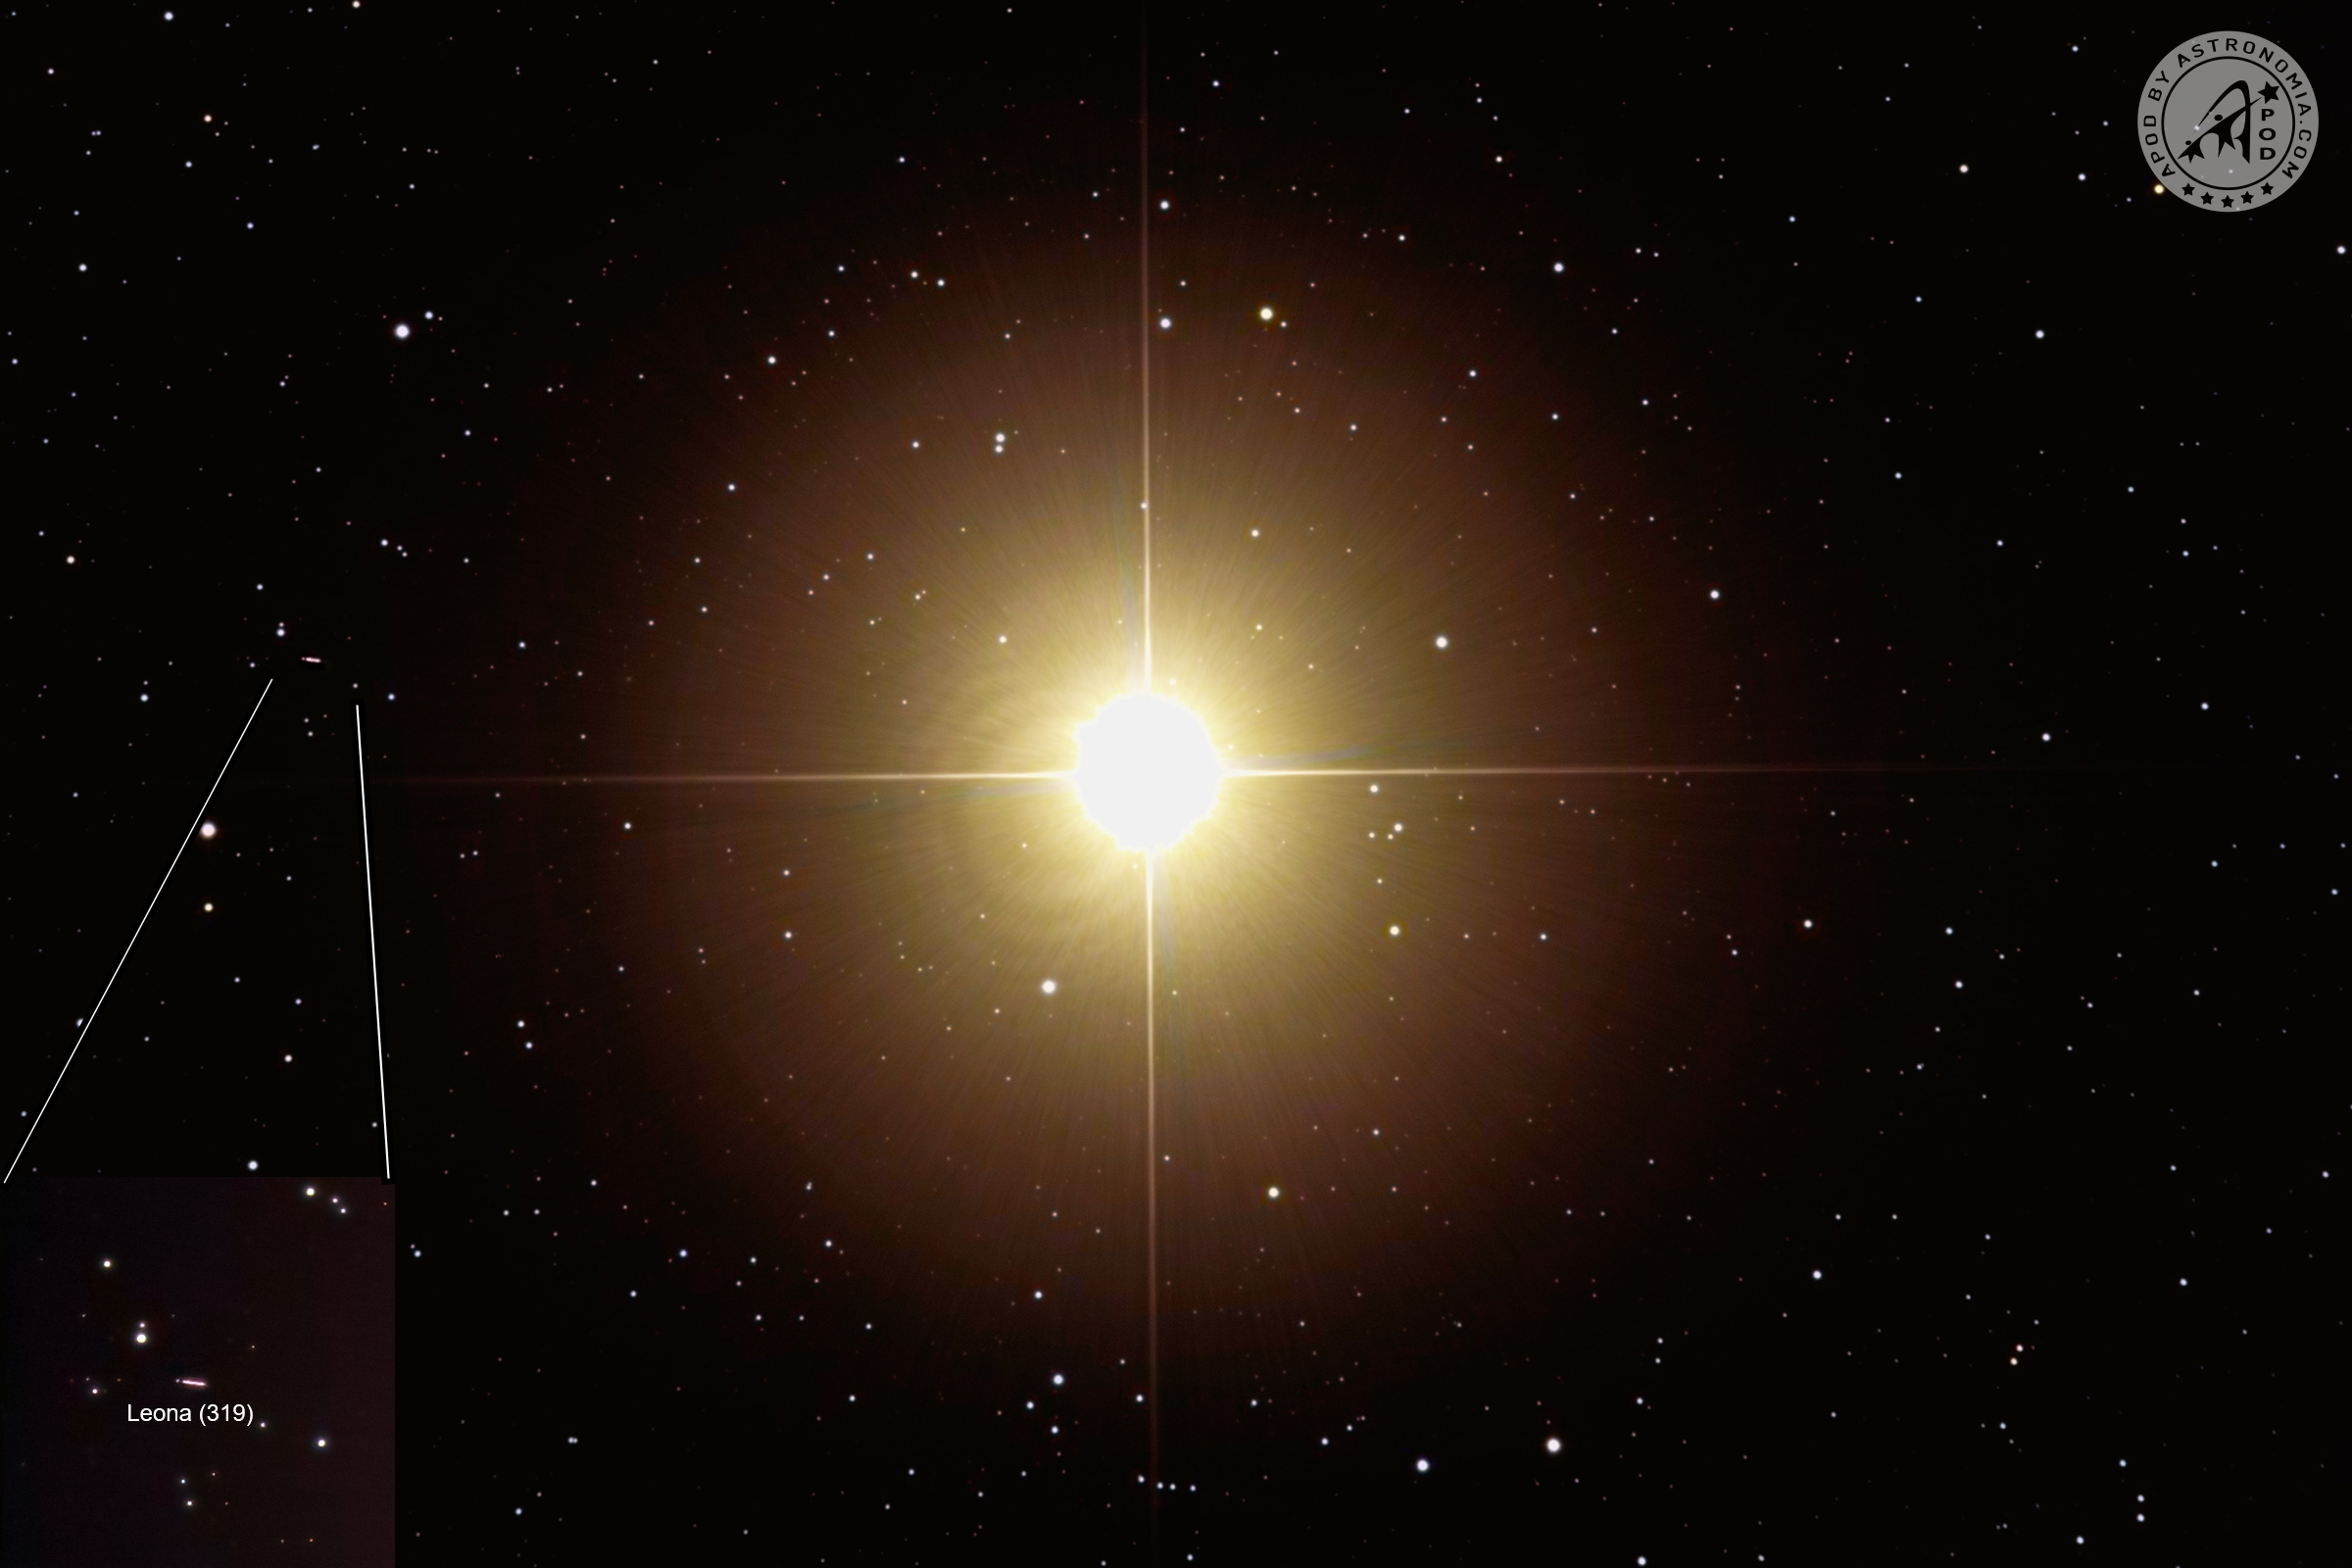 L’Asteroide Leona si avvicina a Betelgeuse